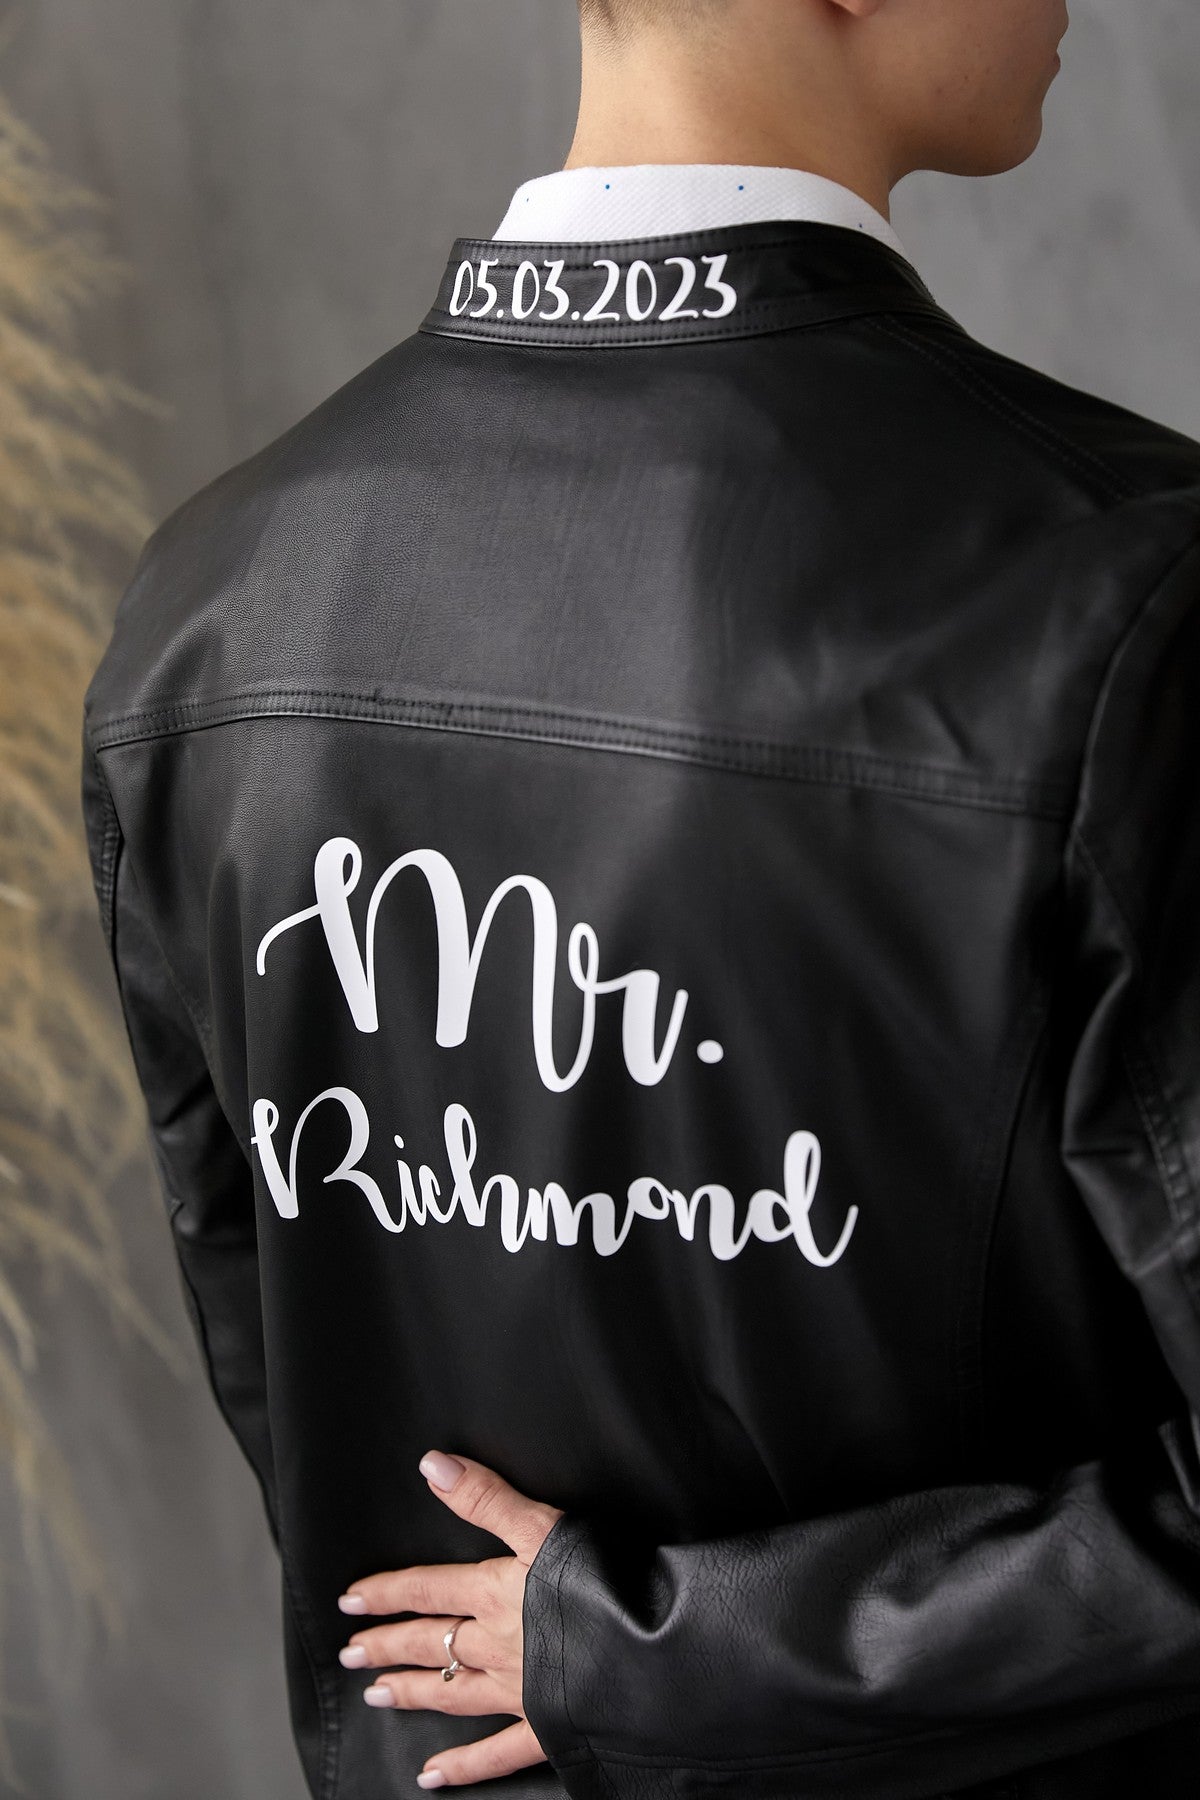 Bridal Custom faux Leather Jacket for Wedding - autumn